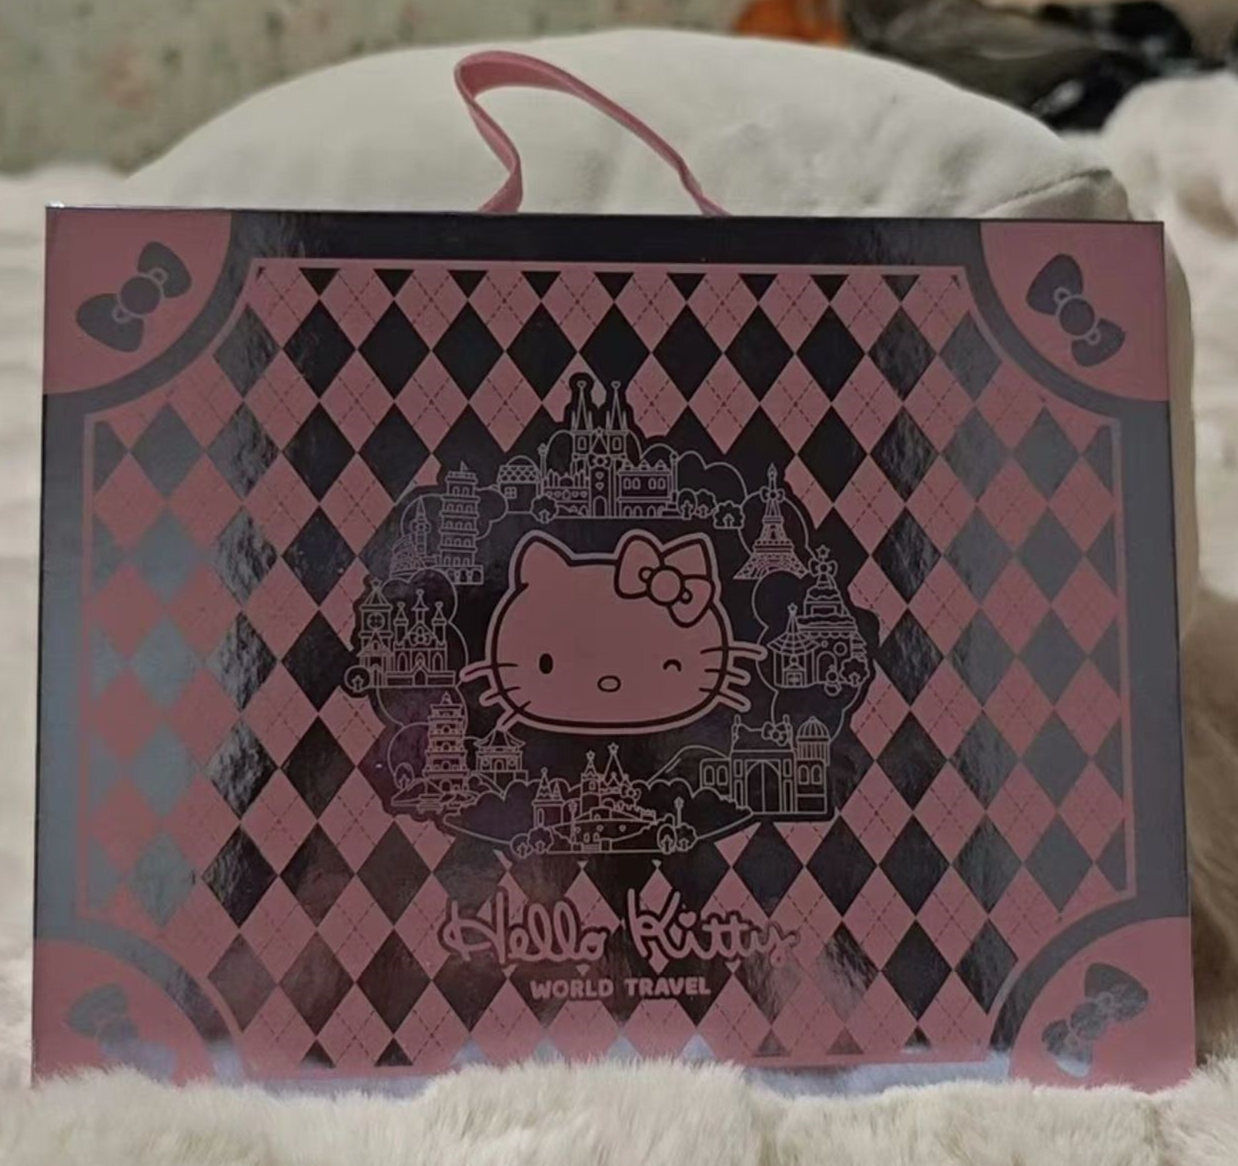 Sanrio Hello Kitty¹ World Travel Adventure Series Collection Card Sealed Box